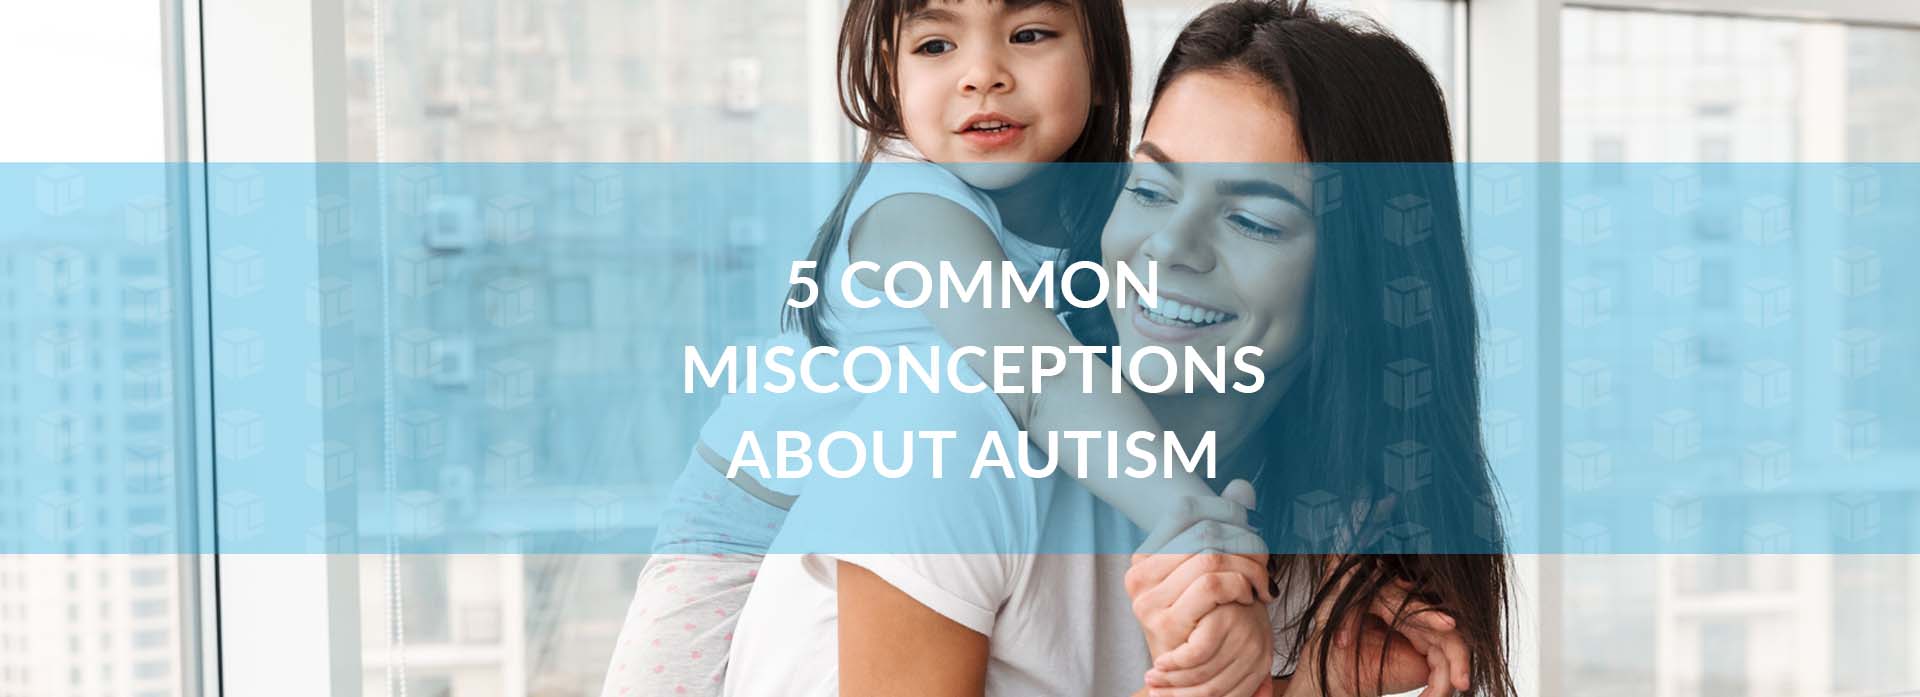 Misconceptions about autism